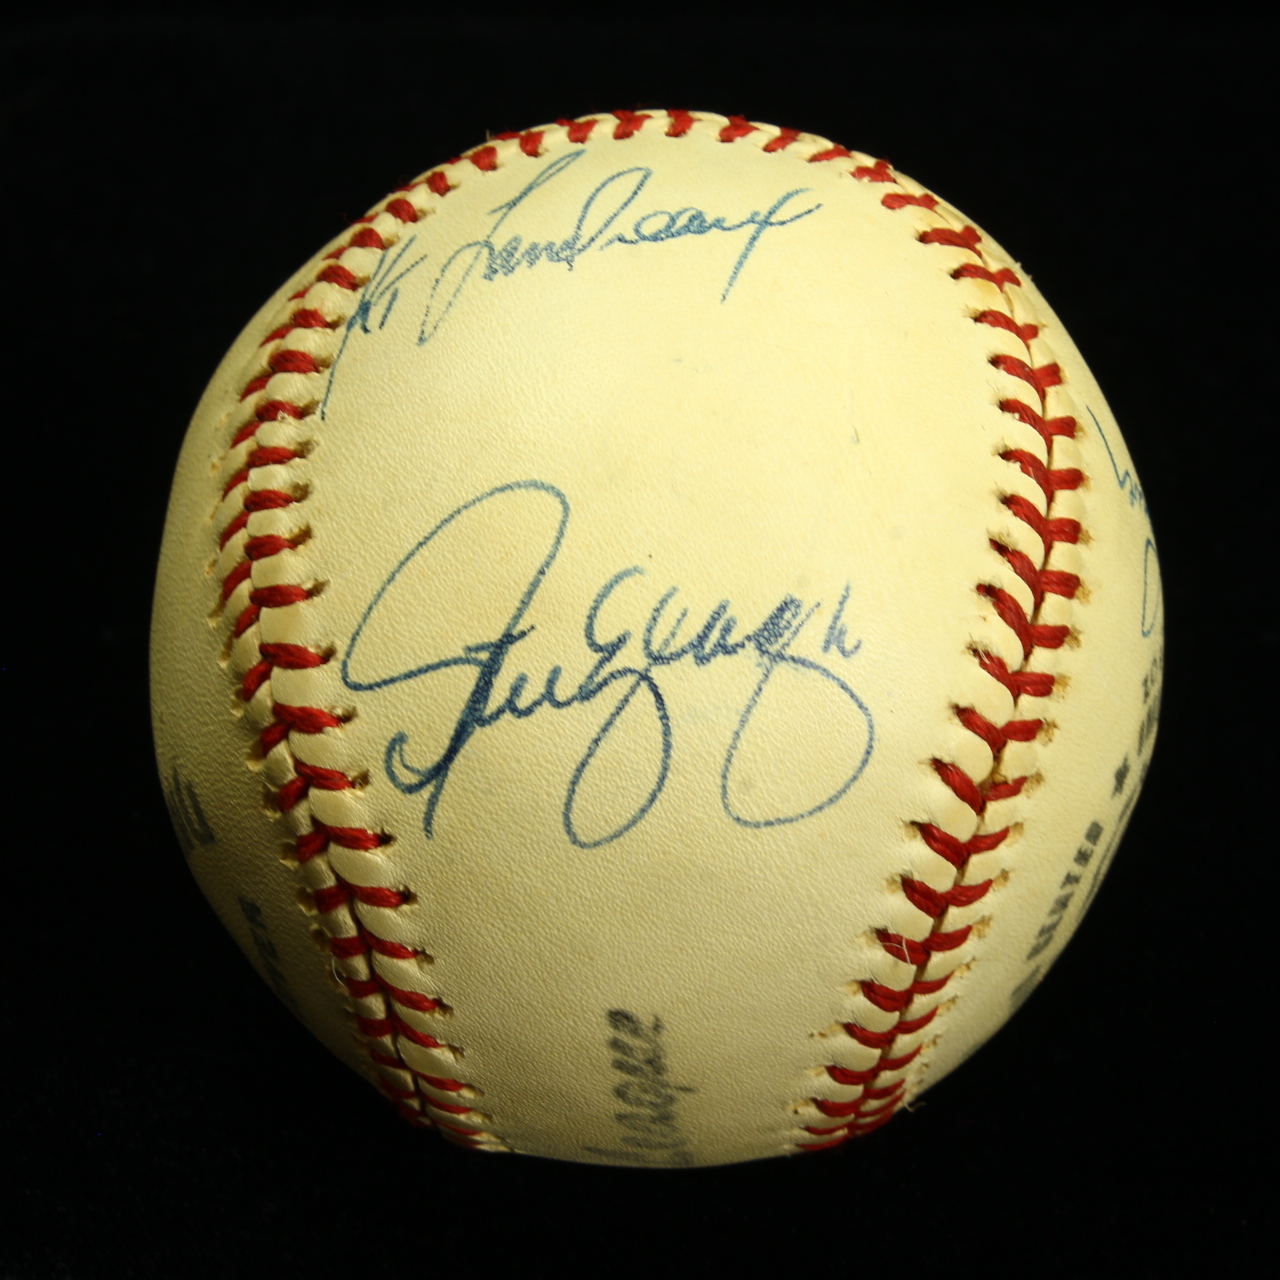 1982 Autographed Dodger Baseball, Garvey, Lasorda +2